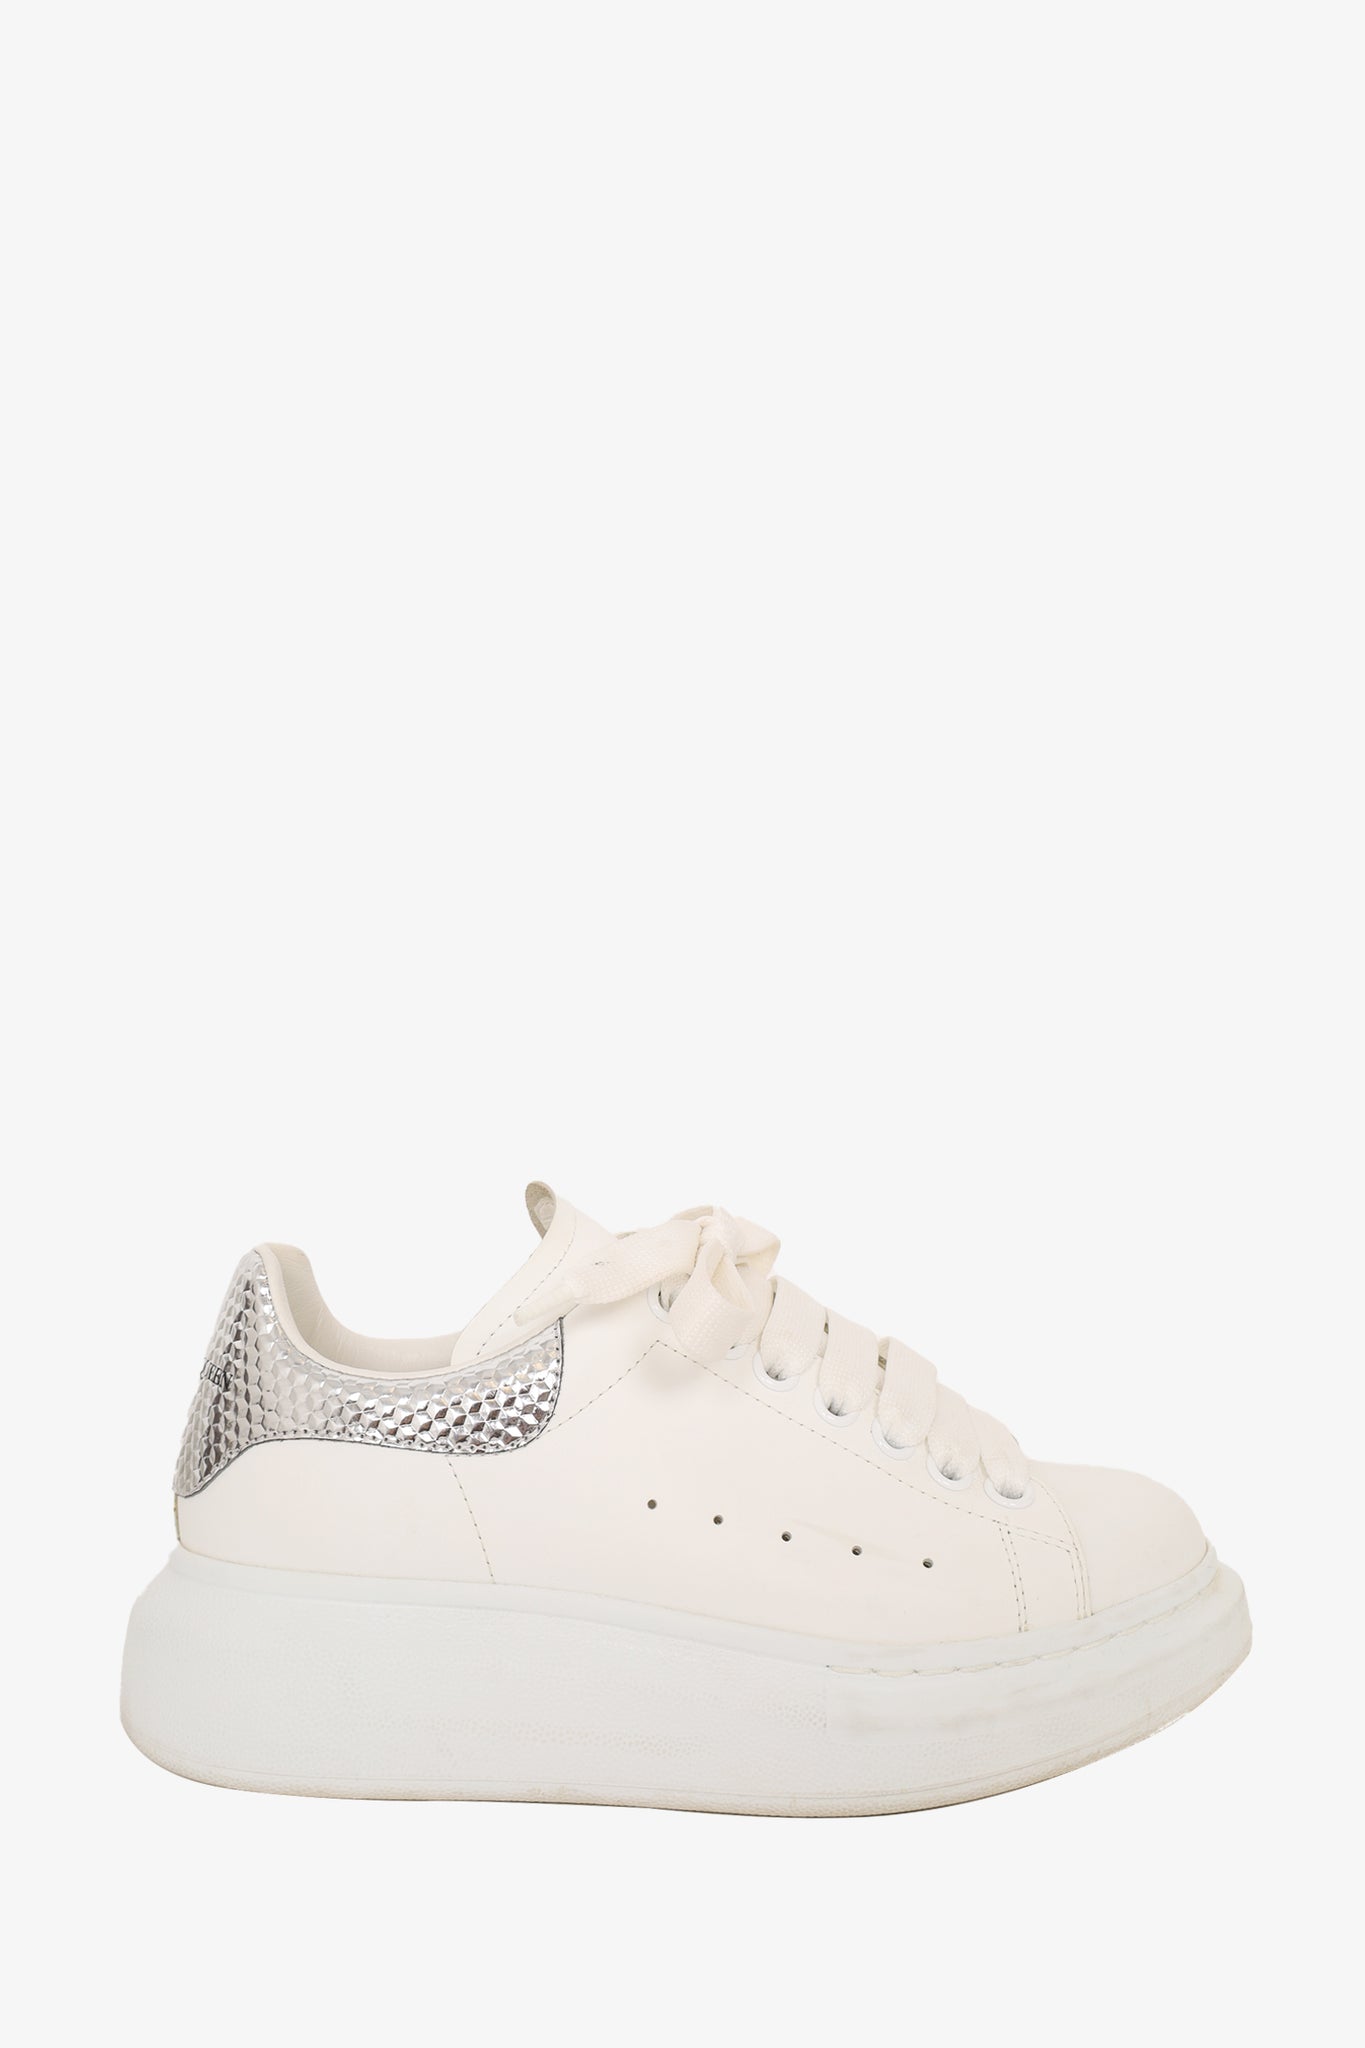 Alexander McQueen | Shoes | Alexander Mcqueen White Dark Silver Sneakers  Size 365 | Poshmark